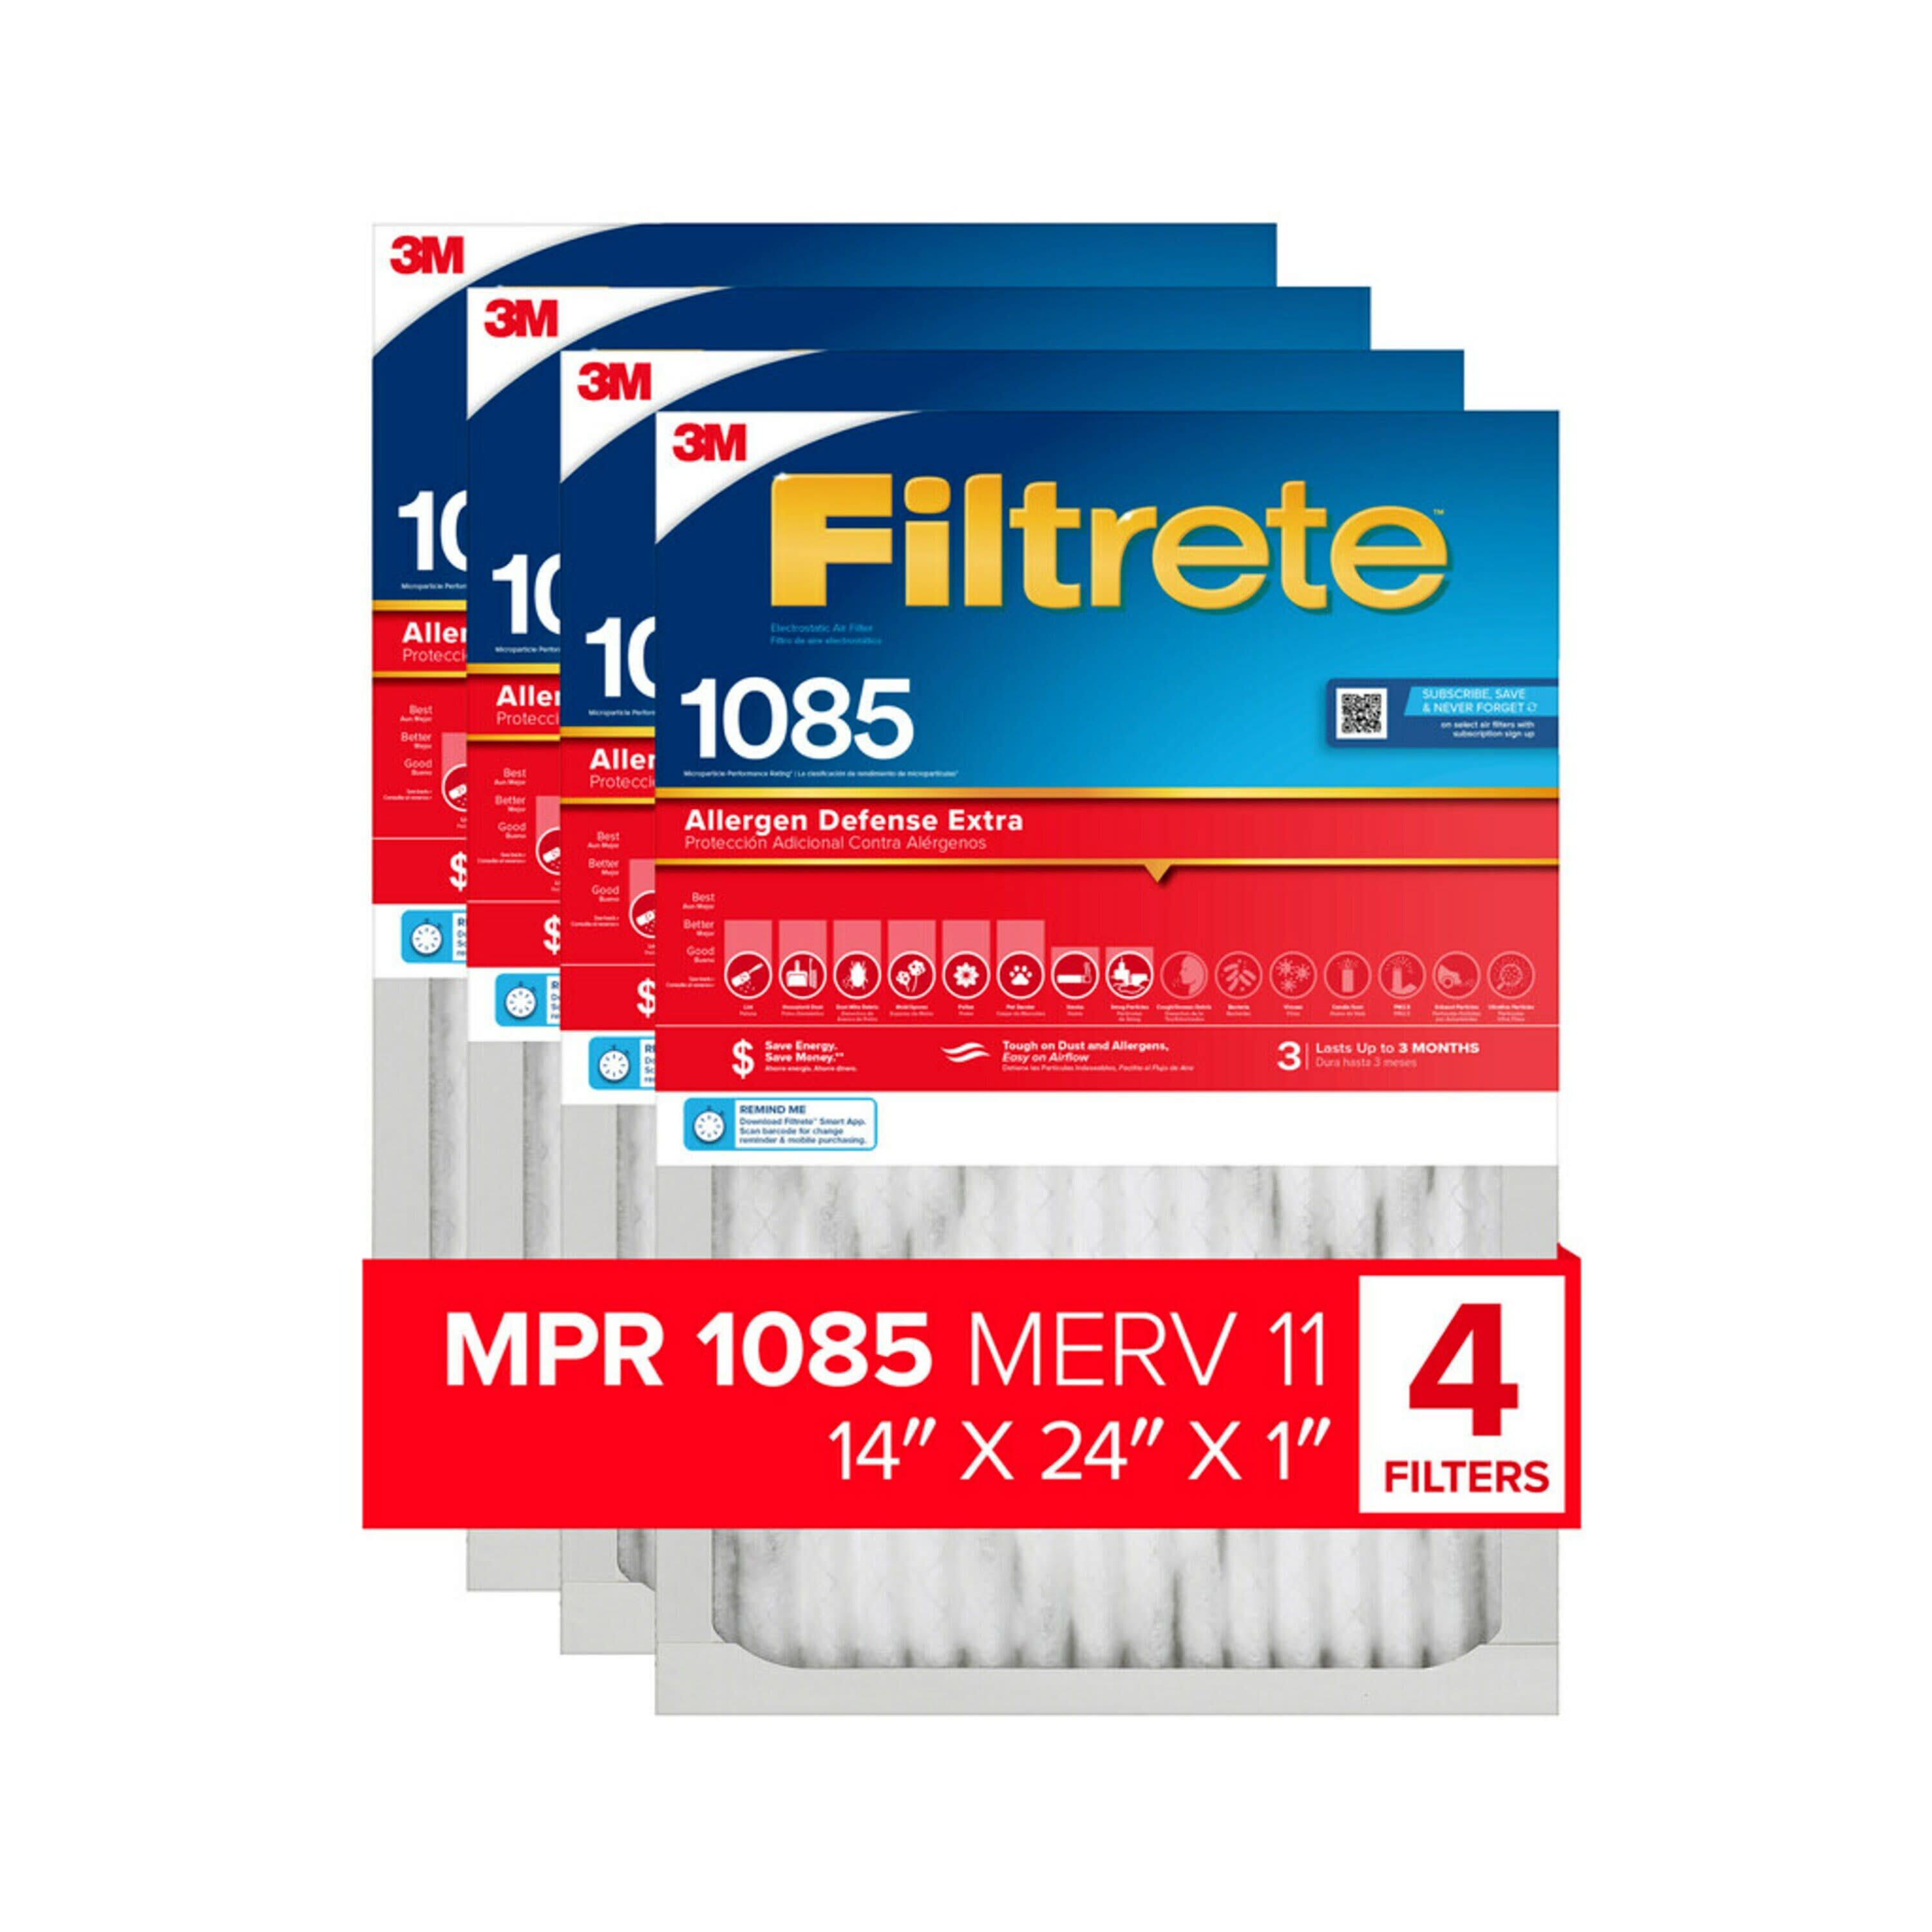 14-in W x 24-in L x 1-in 11 MERV 1085 MPR Allergen Defense Extra Electrostatic Pleated Air Filter (4-Pack) | - Filtrete 1223-4